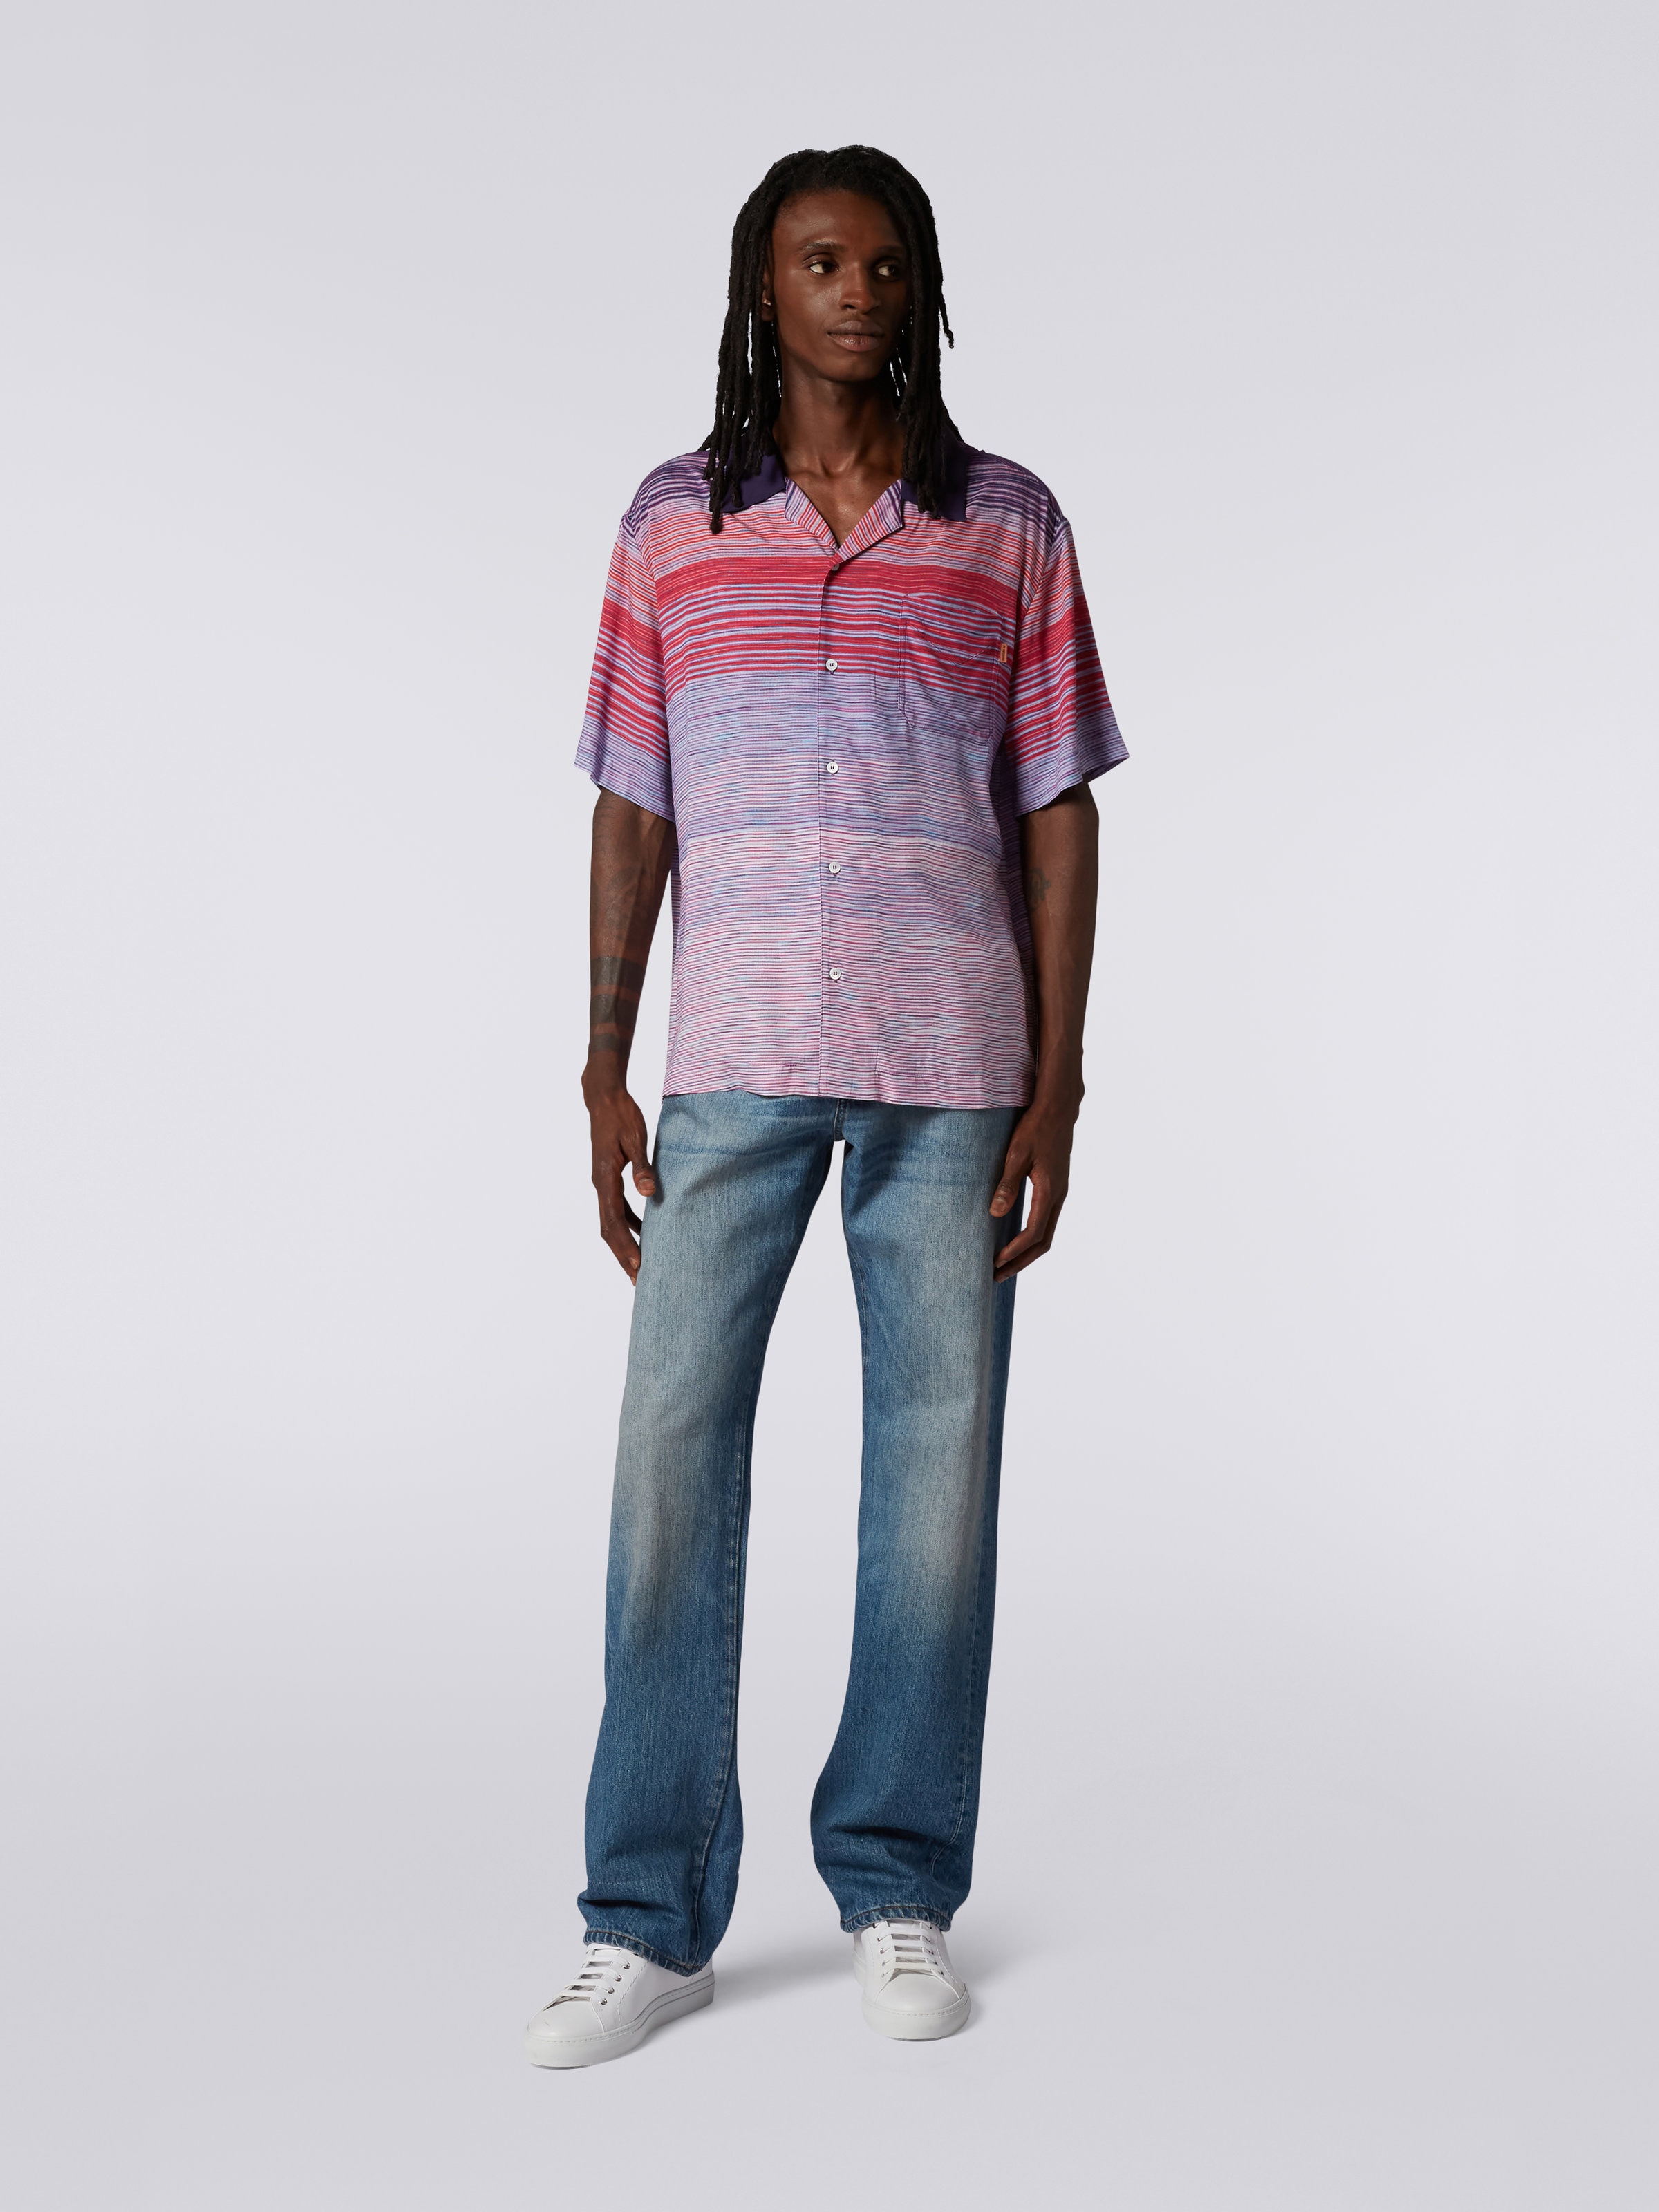 Short-sleeved cotton bowling shirt, Red, Purple & Light Blue - 1